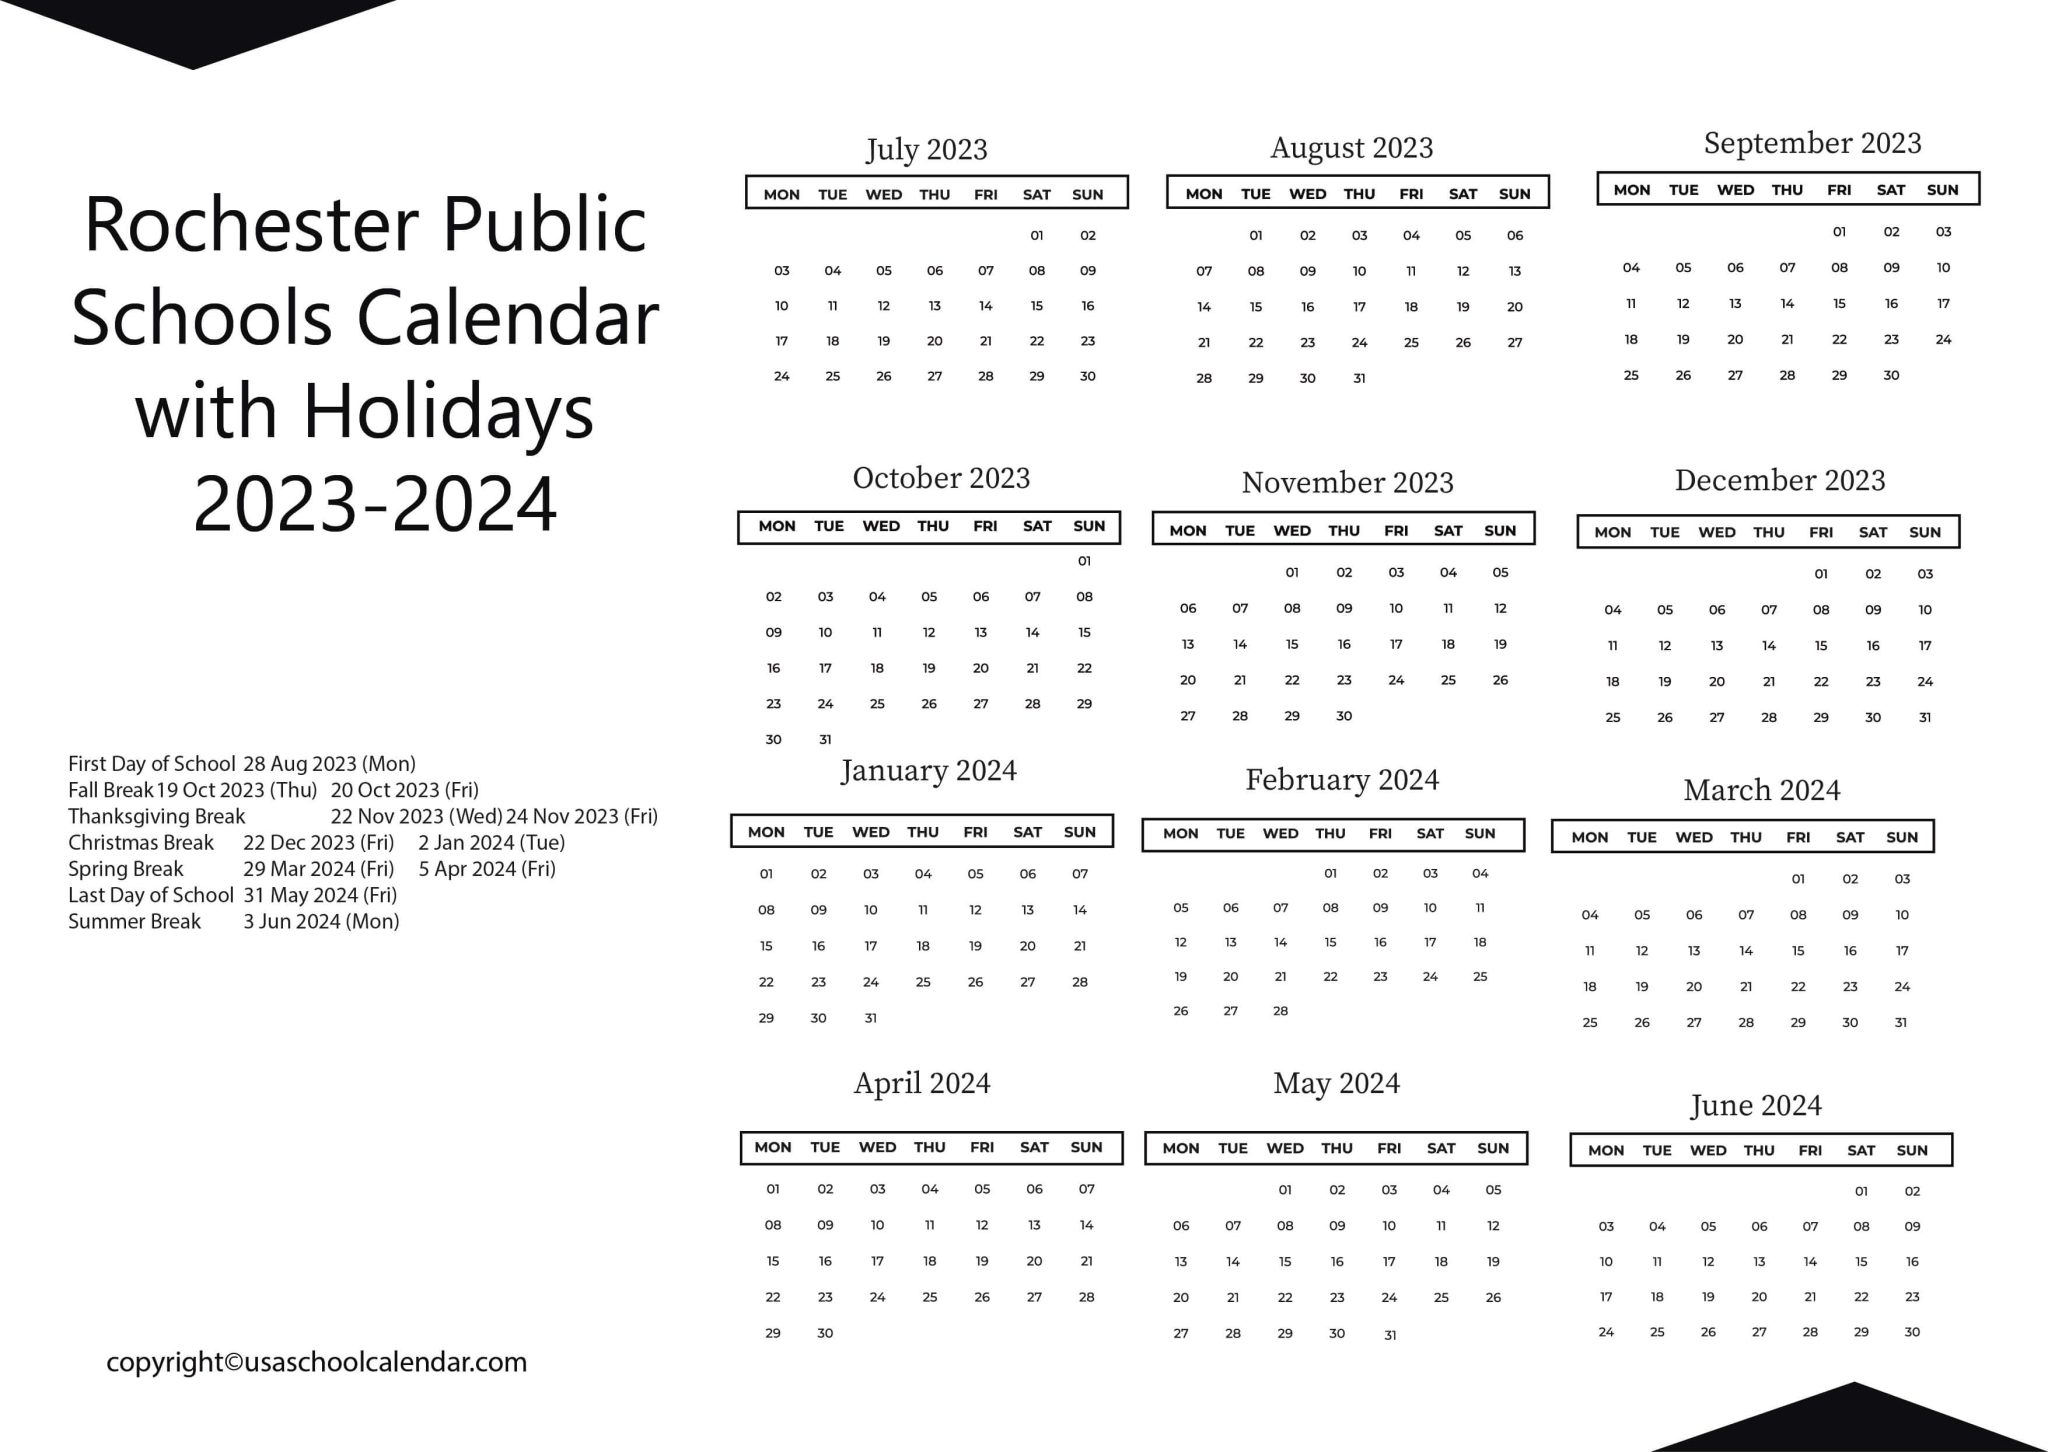 rochester-public-schools-calendar-with-holidays-2023-2024